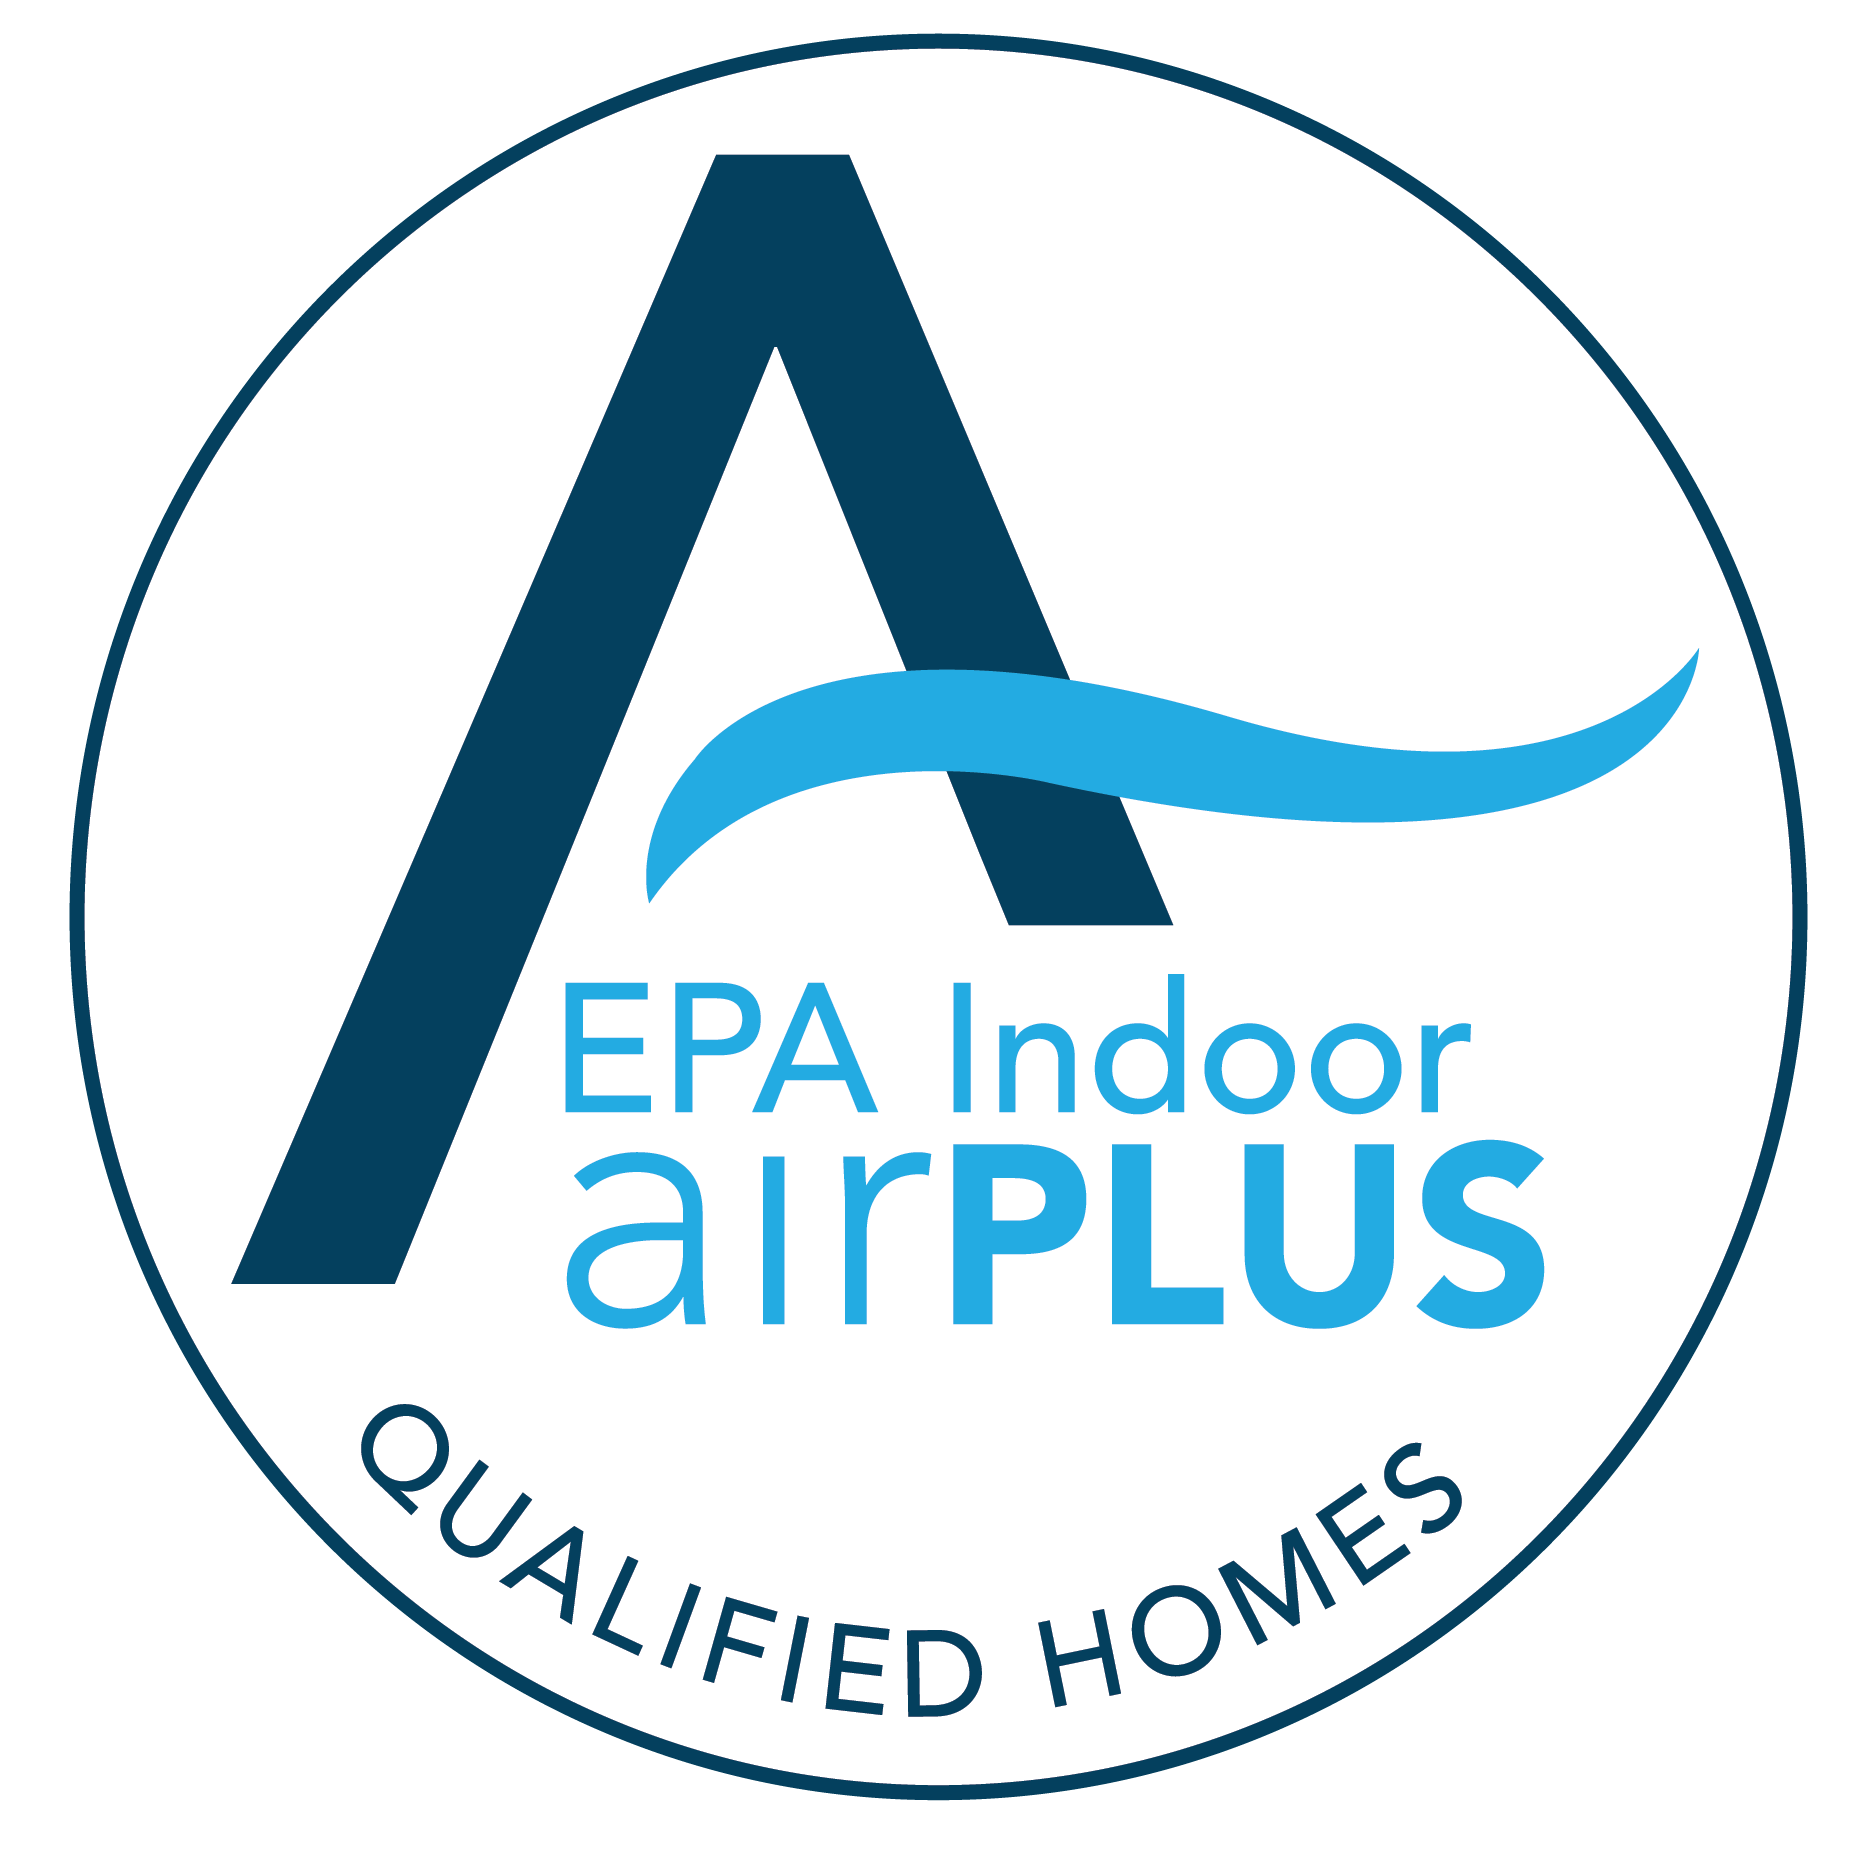 EPA Indoor airPLUS Qualified Homes